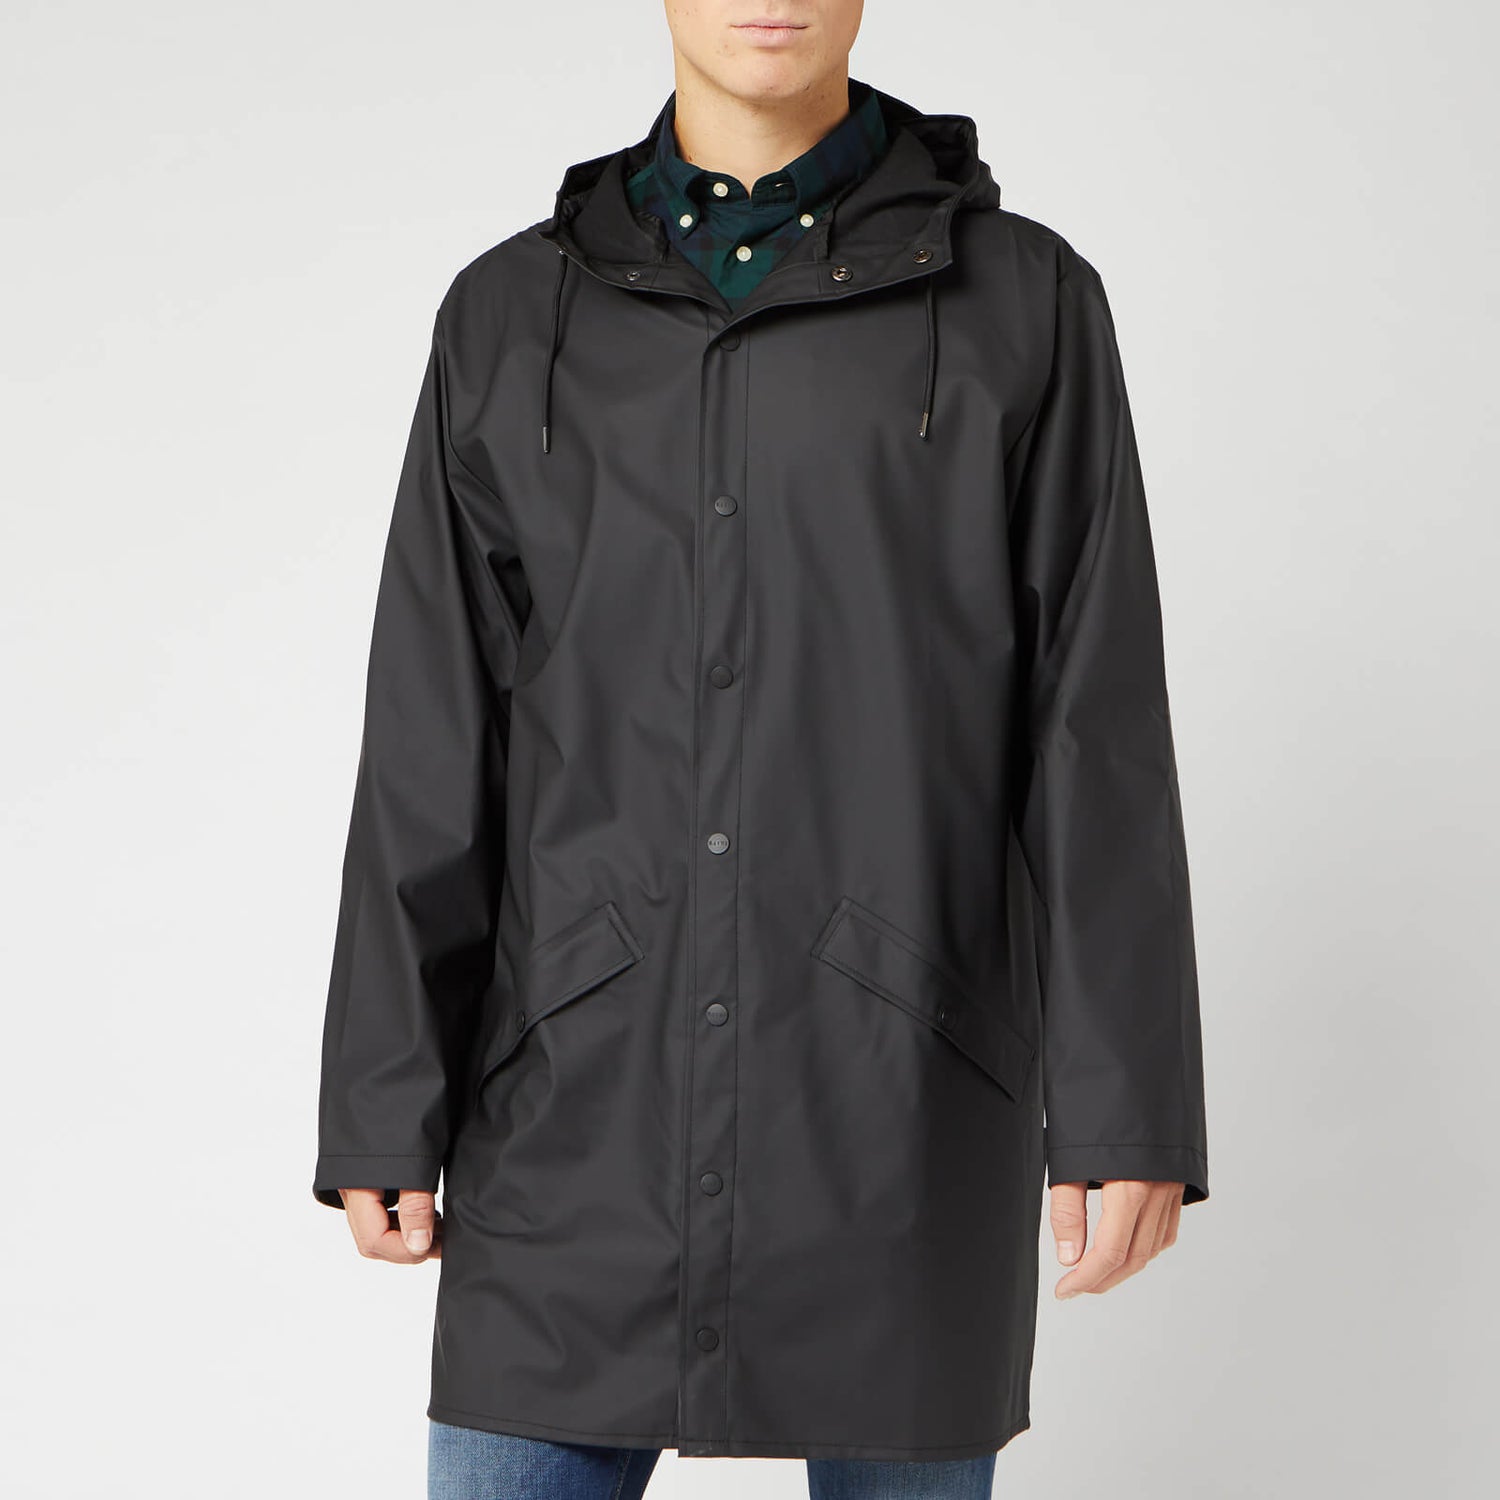 Rains Long Jacket - Black - XS/S